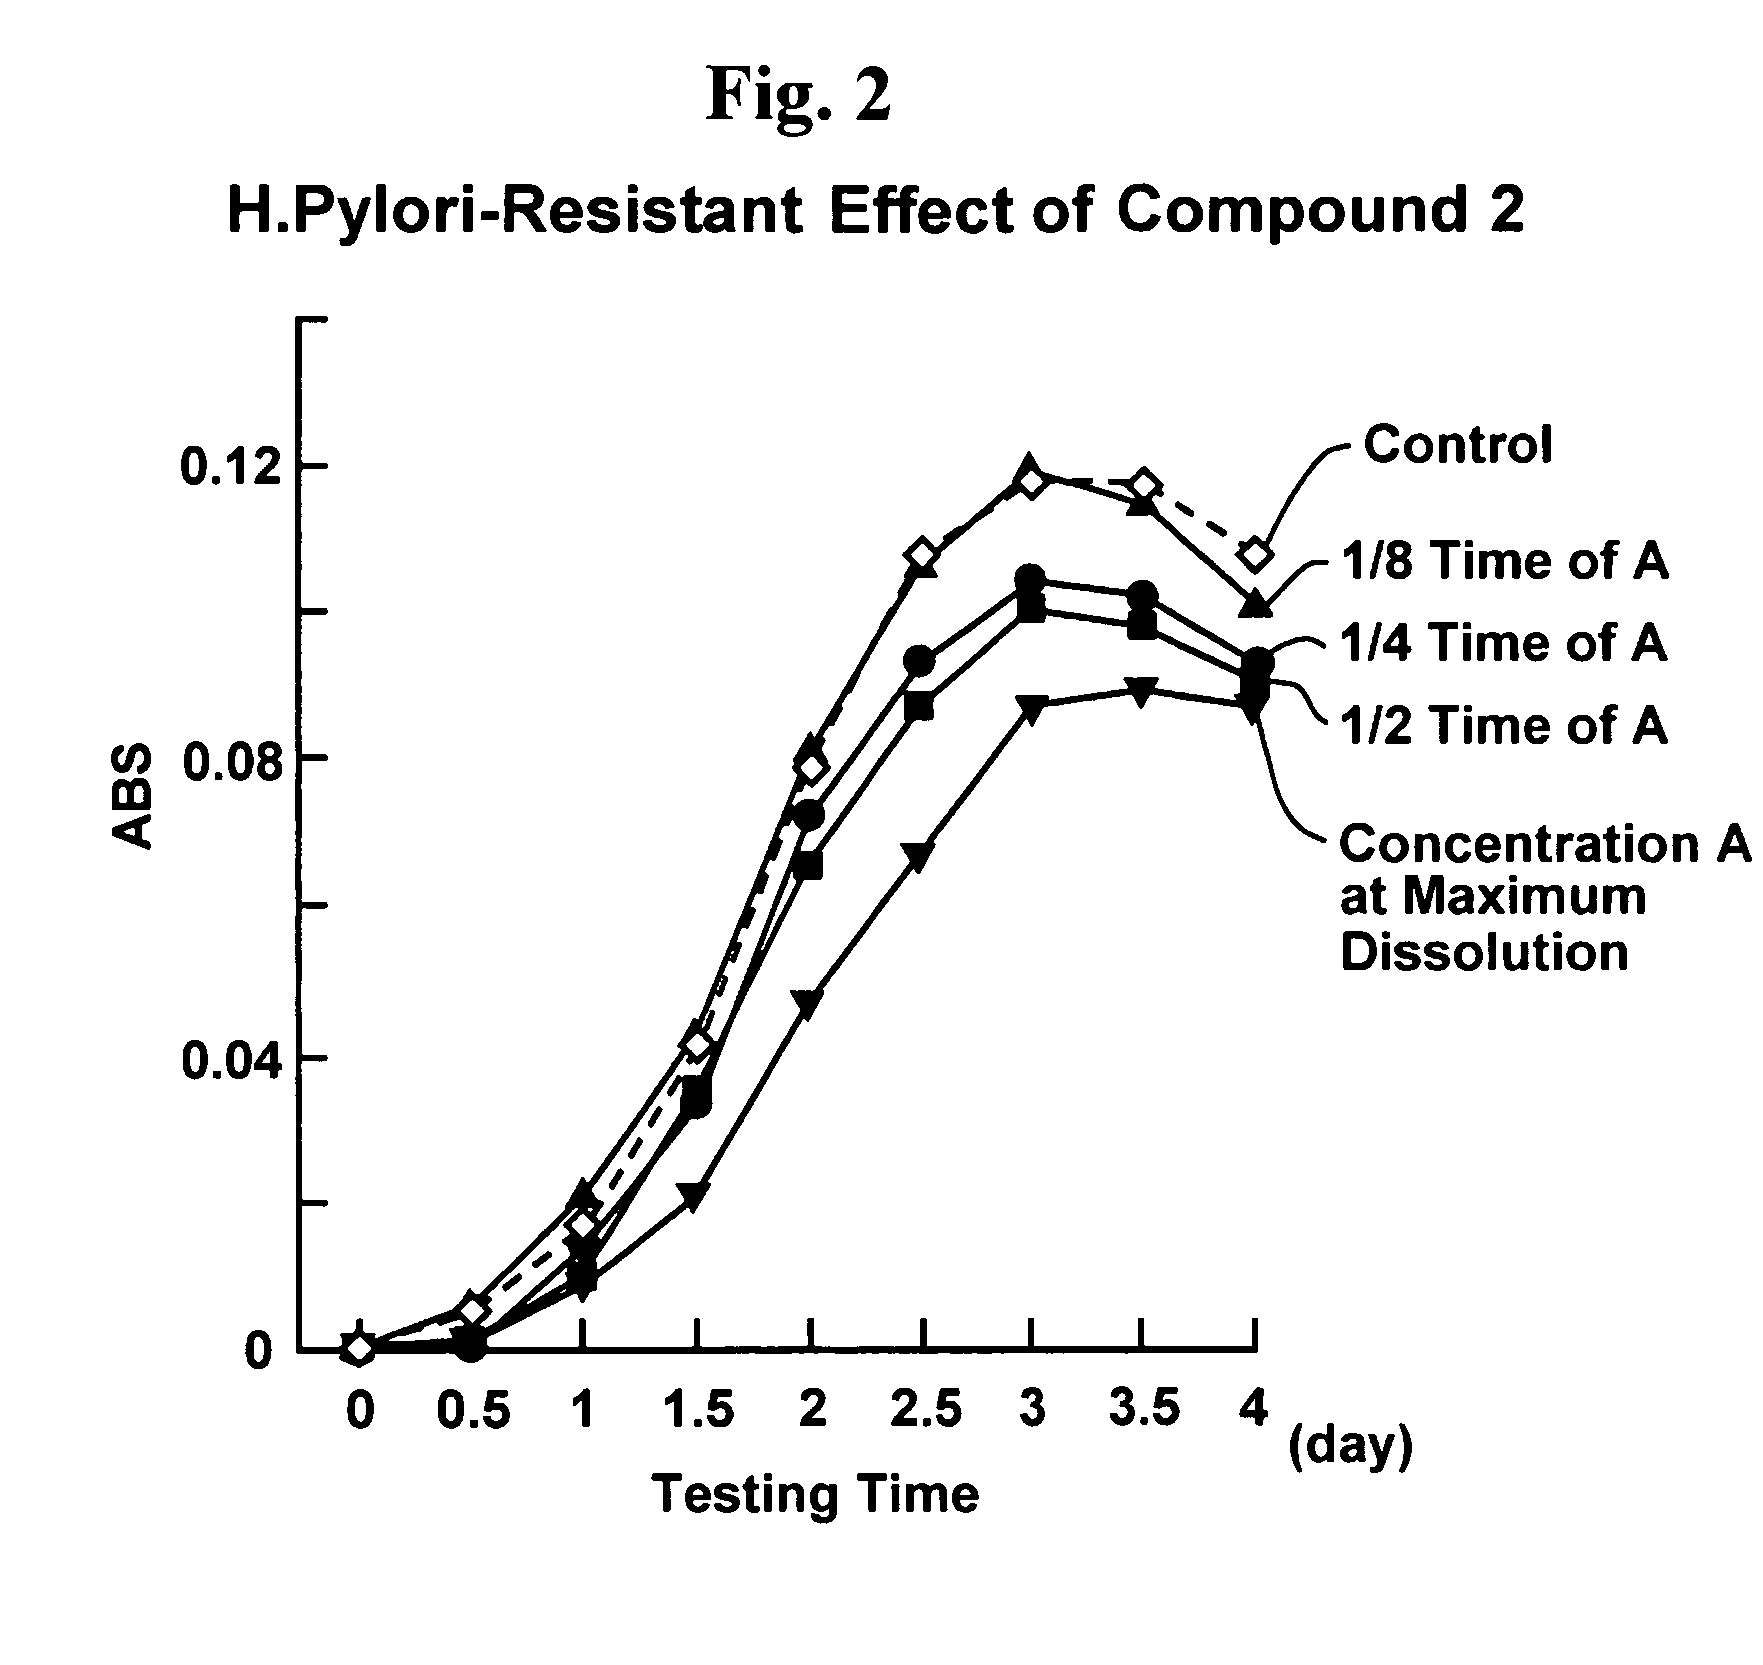 Proliferation inhibitor of helicobacter pylori including alpha-n-acetyl-glucosaminyl bond-containing monosaccharide derivatives